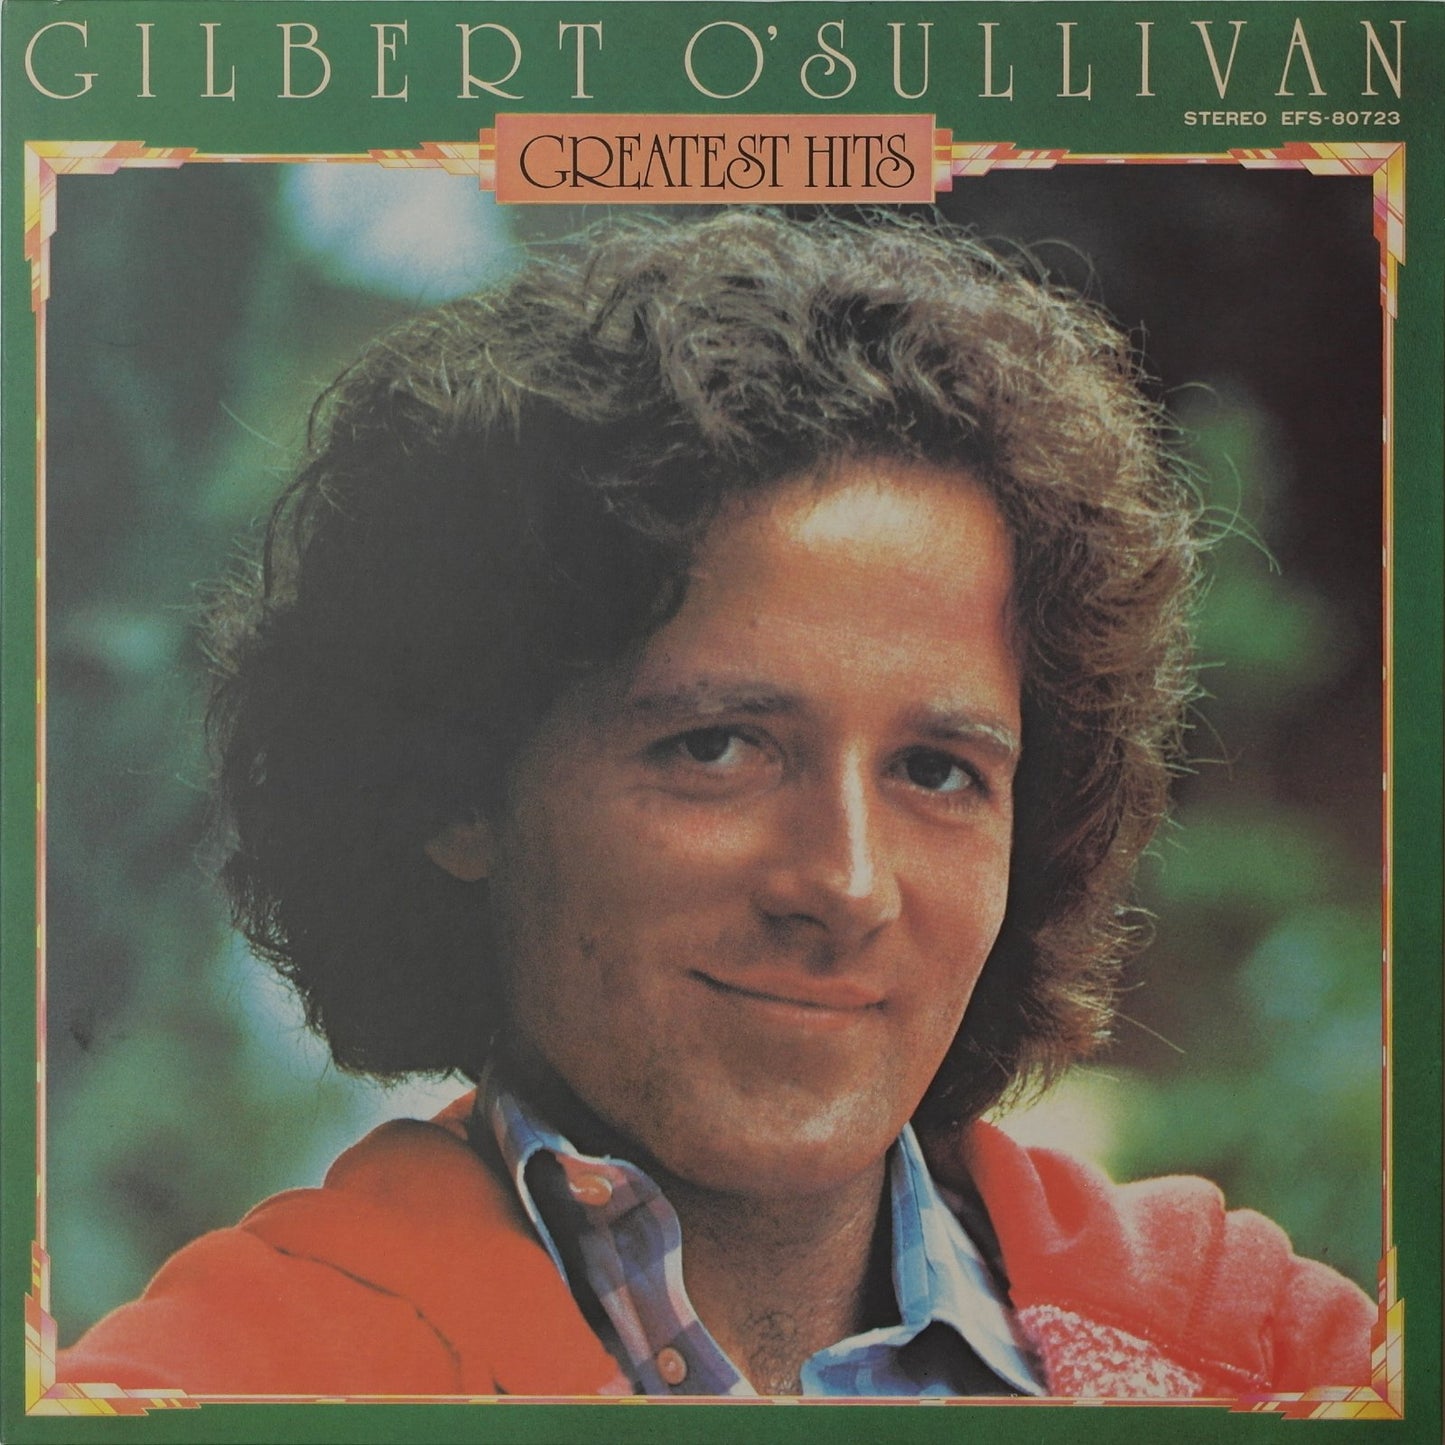 GILBERT O'SULLIVAN - Gilbert O'Sullivan Greatest Hits